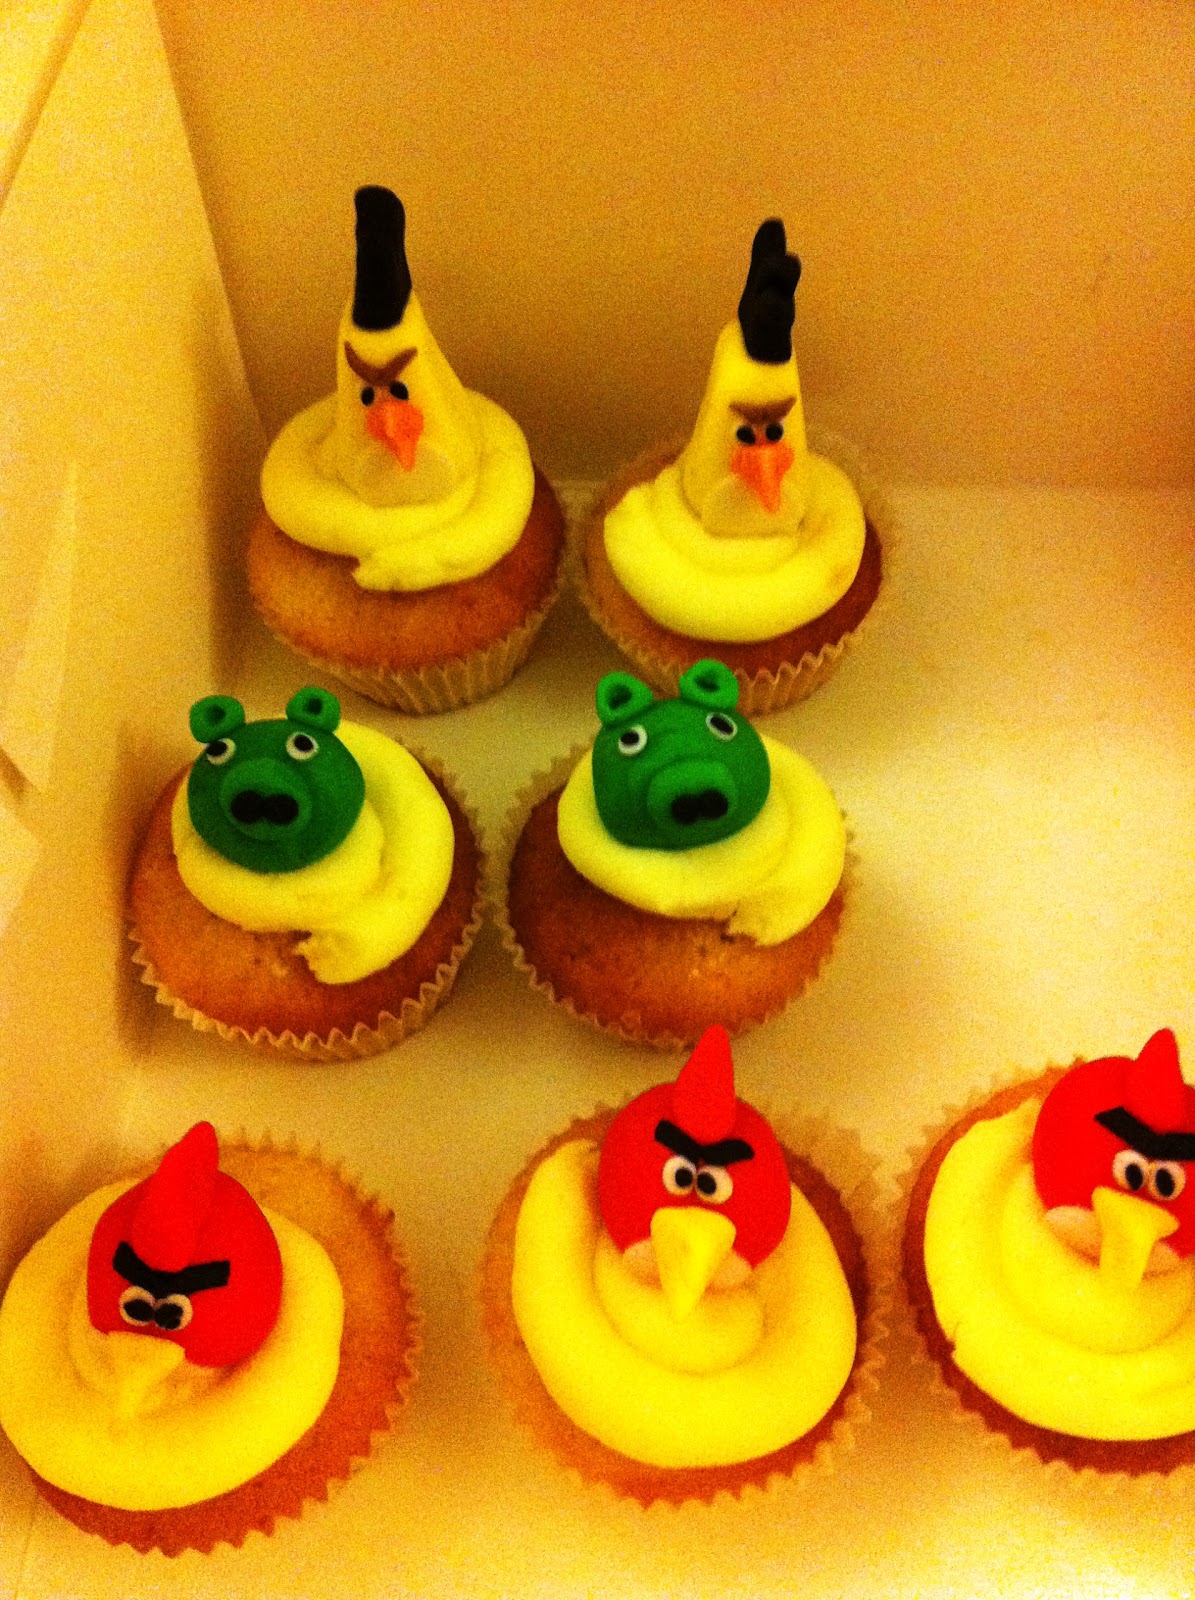 Flour Power Cake Journey: Yummy Angry Birds Cupcakes